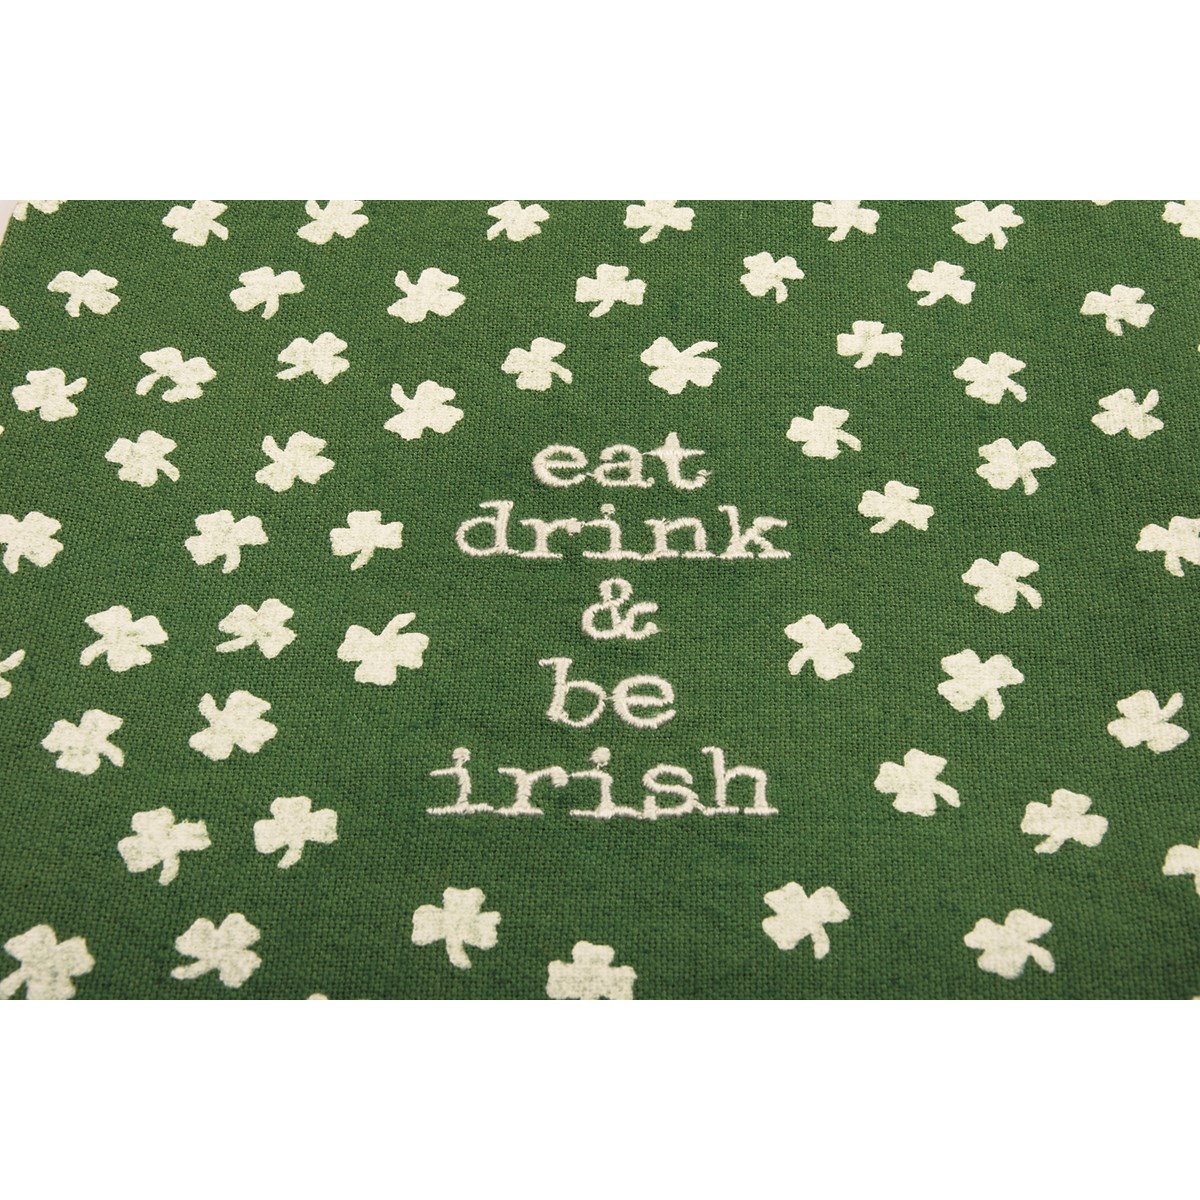 Eat Drink & Be Irish Kitchen Towel - Cotton, Linen